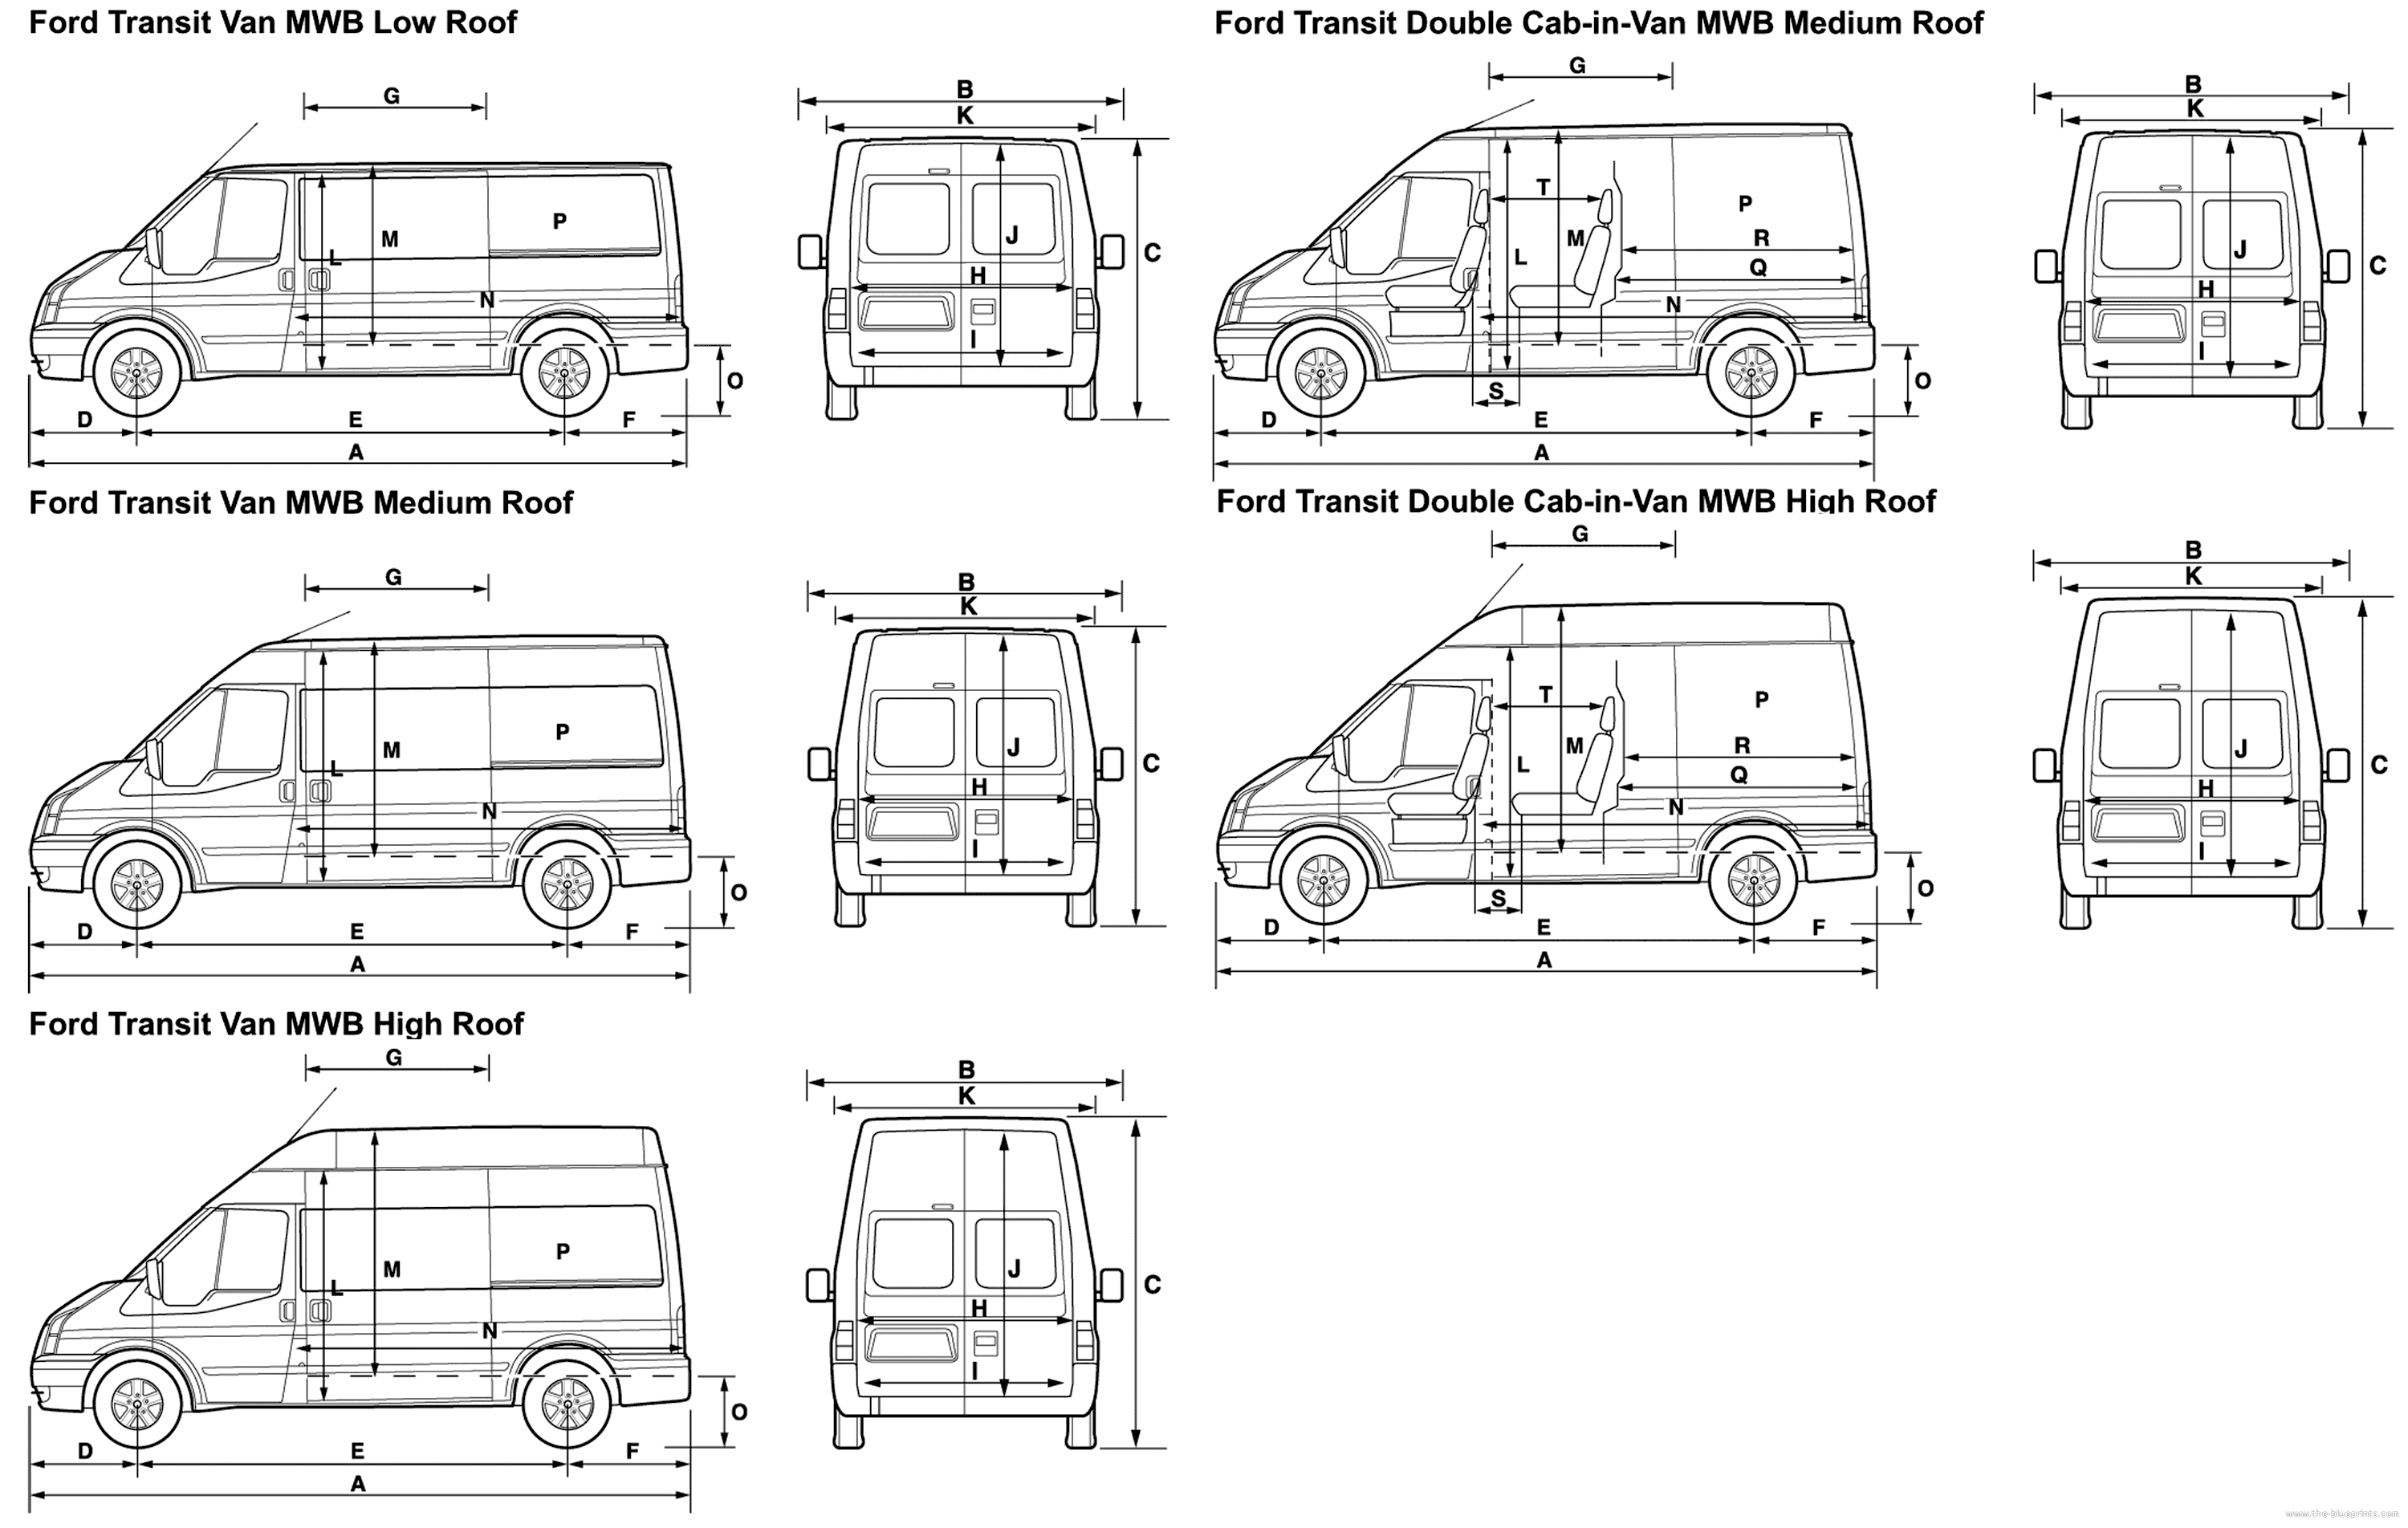 Ford transit swb van dimensions #8